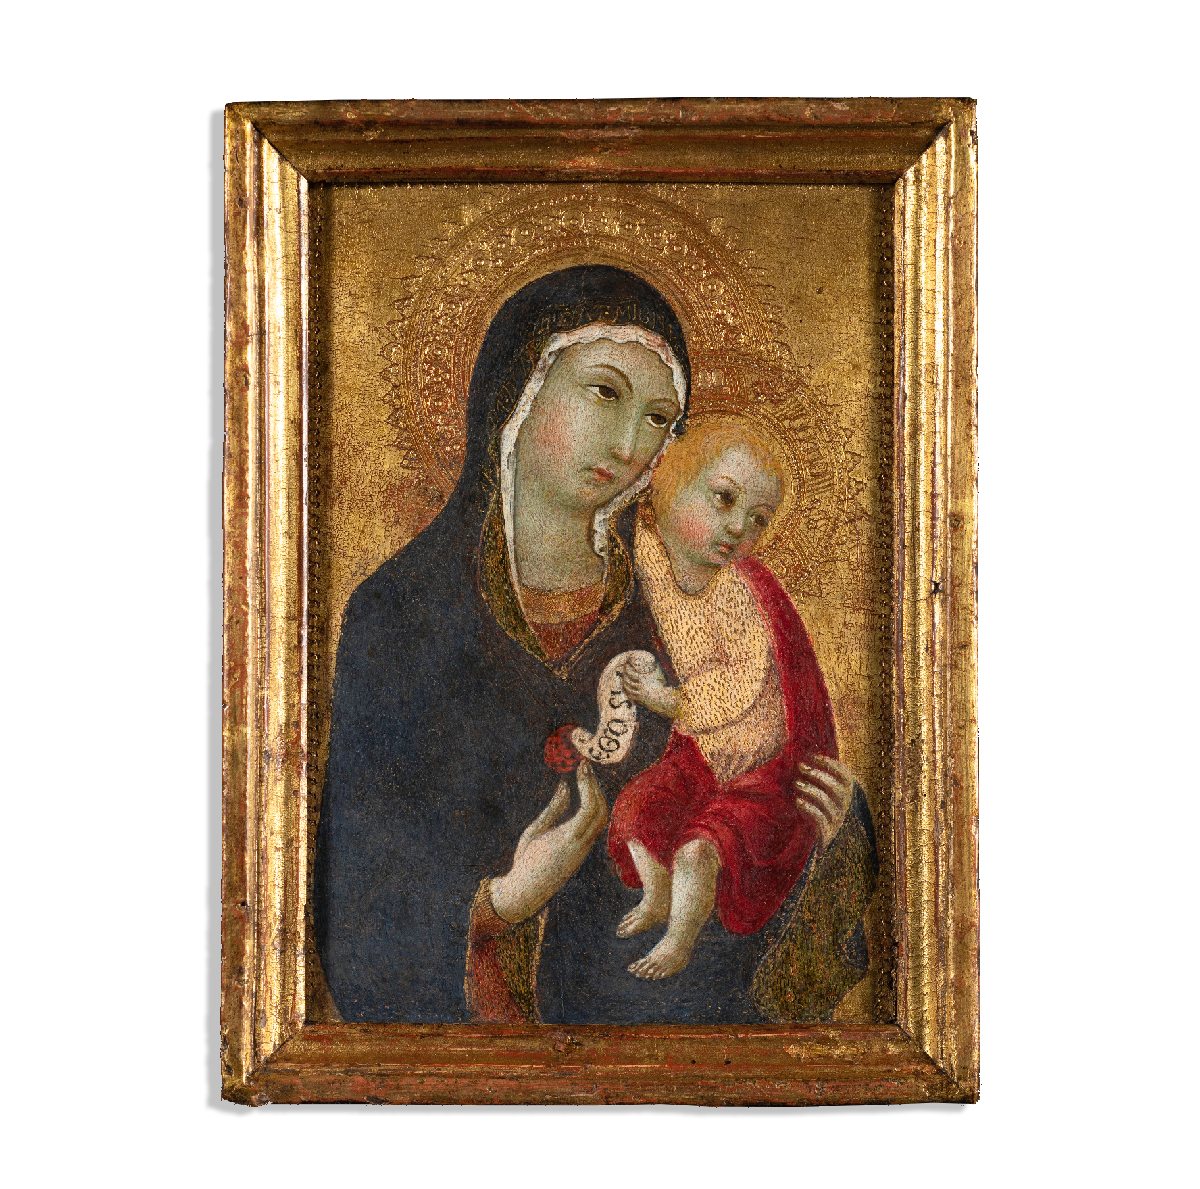 Madonna and Child, ca. 1450